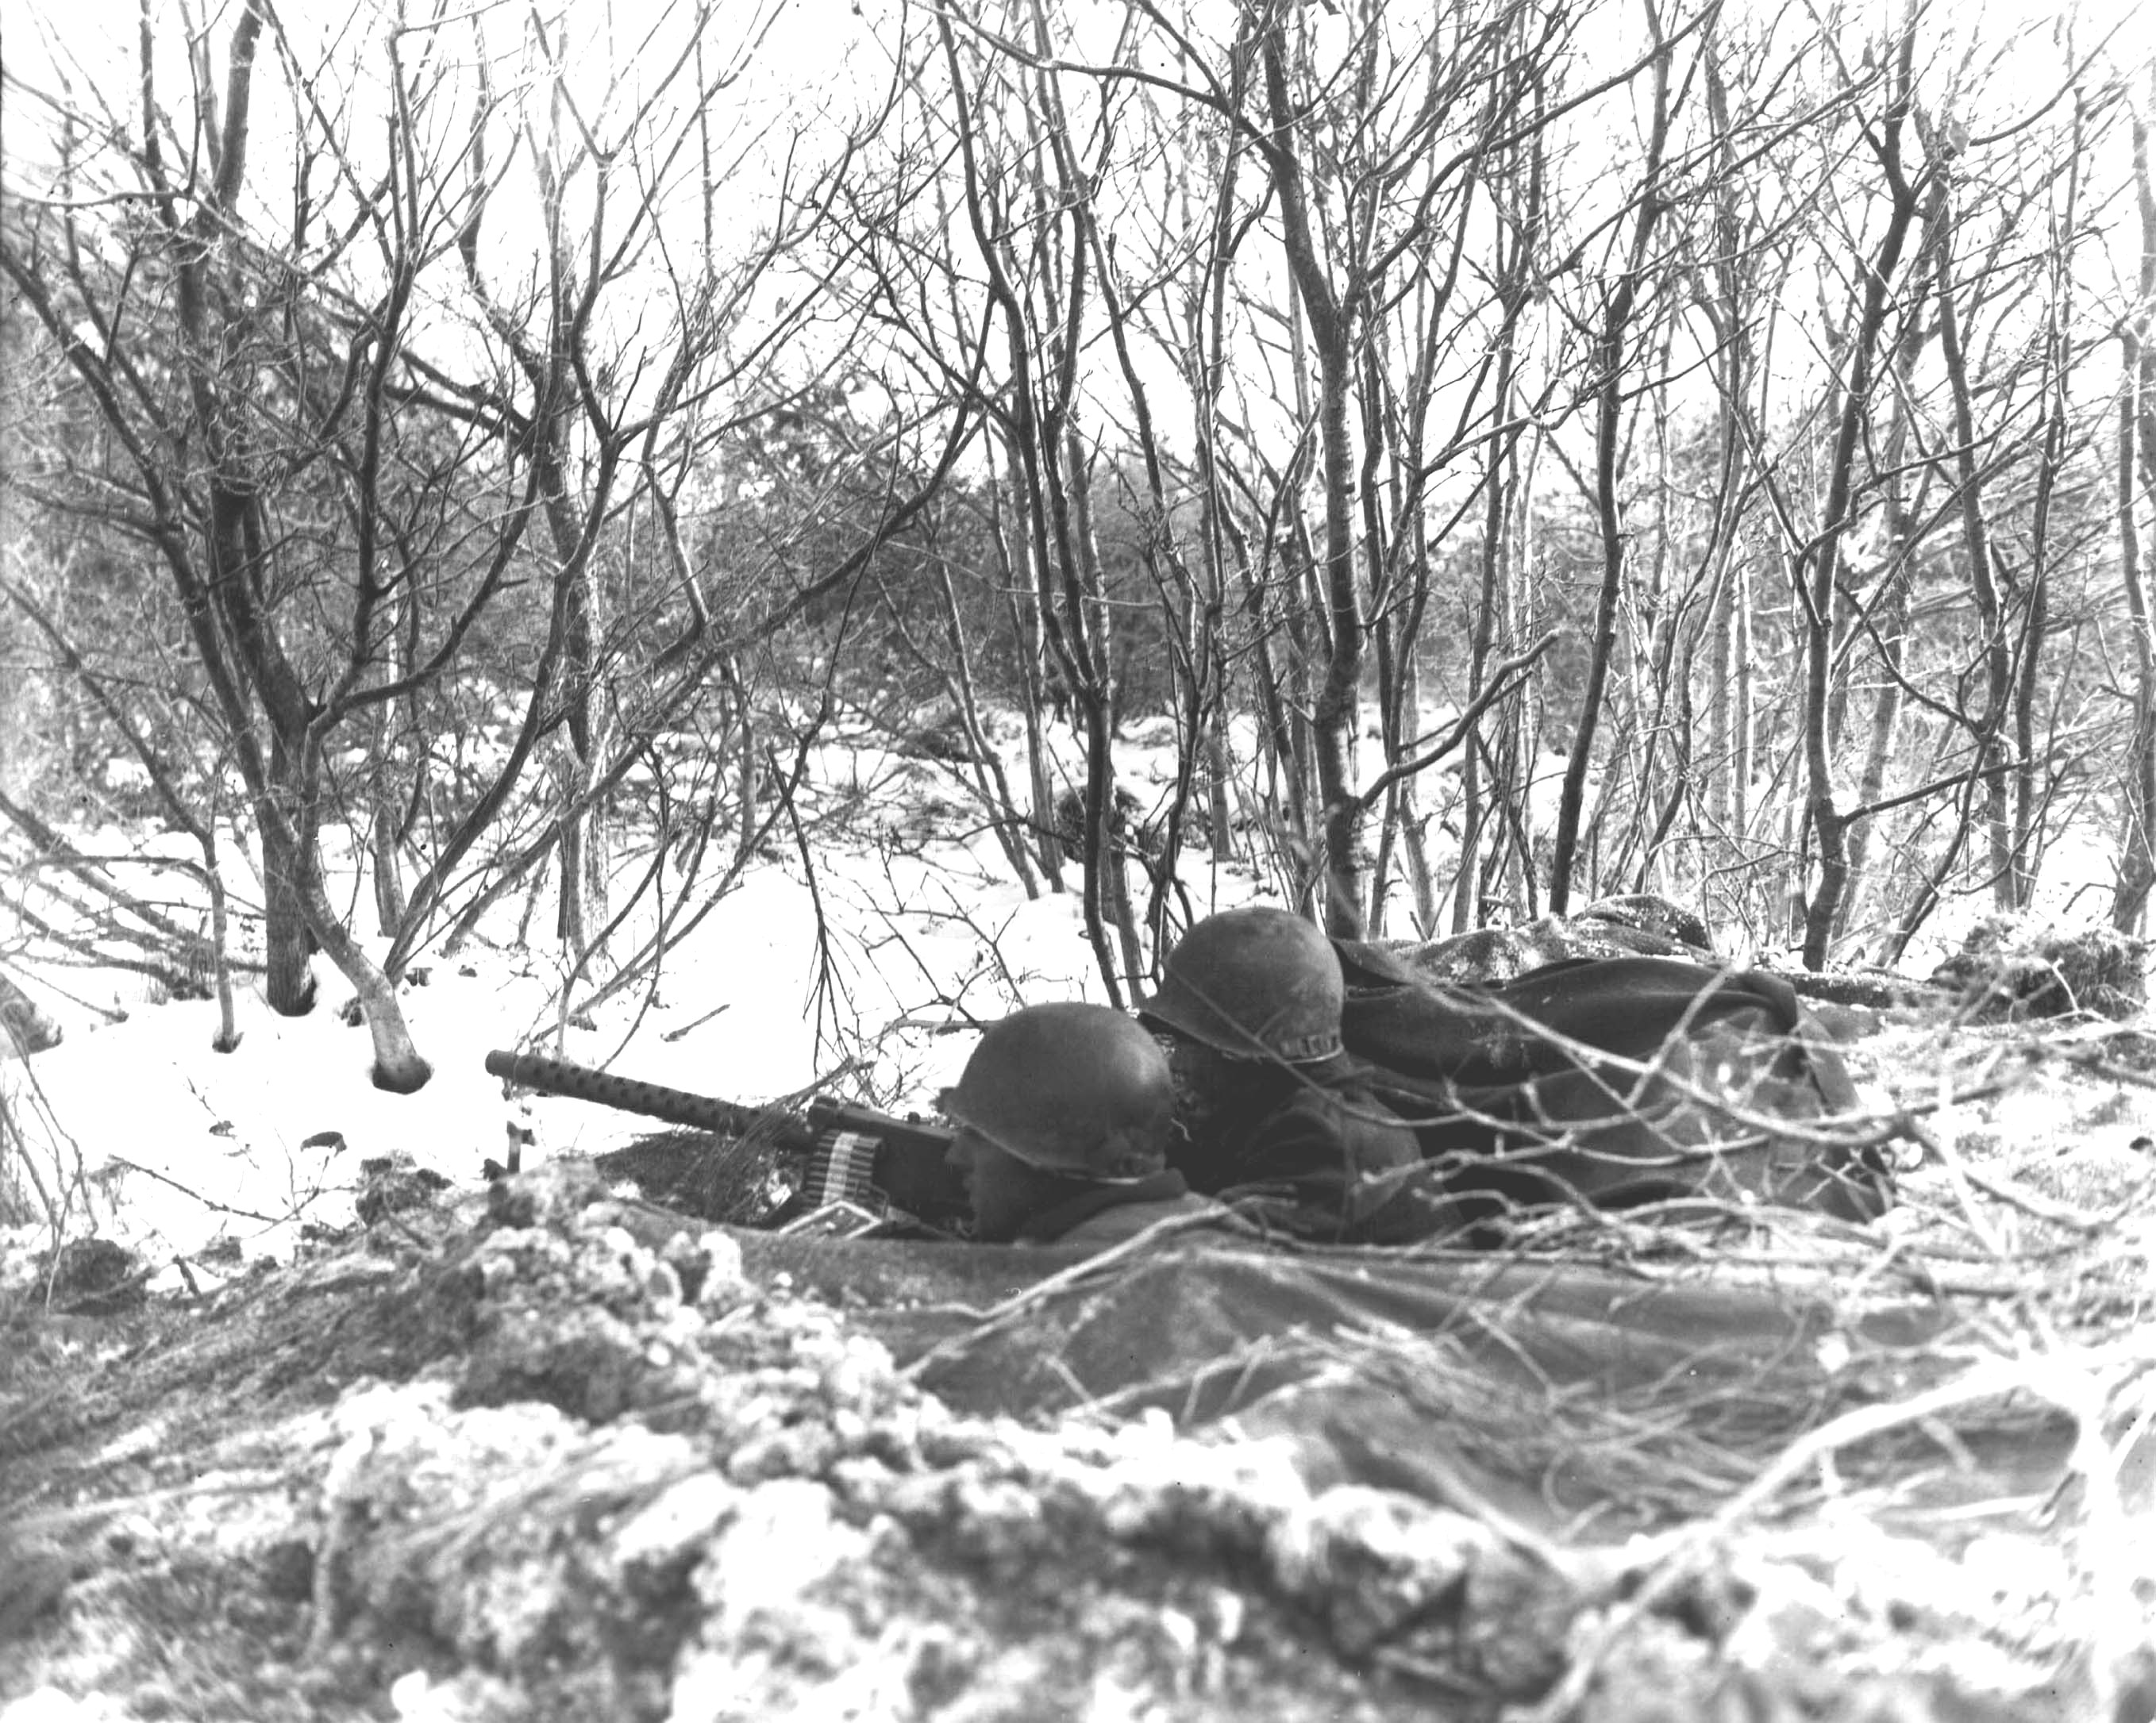 Machine gun post manned by men of 1st Battalion, 157th Regiment, US 45th Division, Niederbronn-les-Bains, France, 10 Dec 1944; note M1919 Browning machine gun